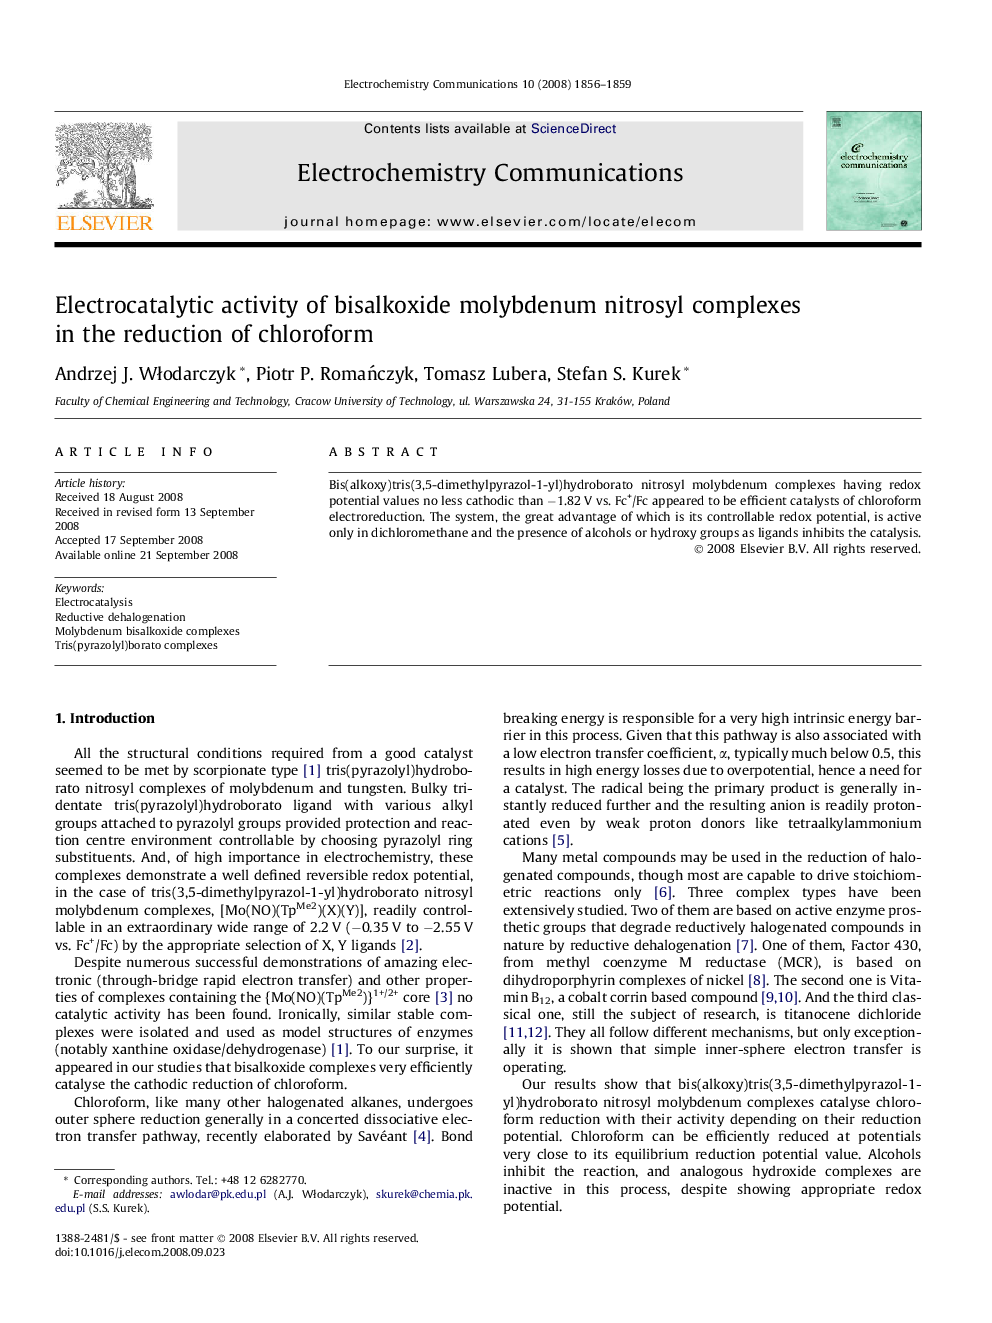 Electrocatalytic activity of bisalkoxide molybdenum nitrosyl complexes in the reduction of chloroform